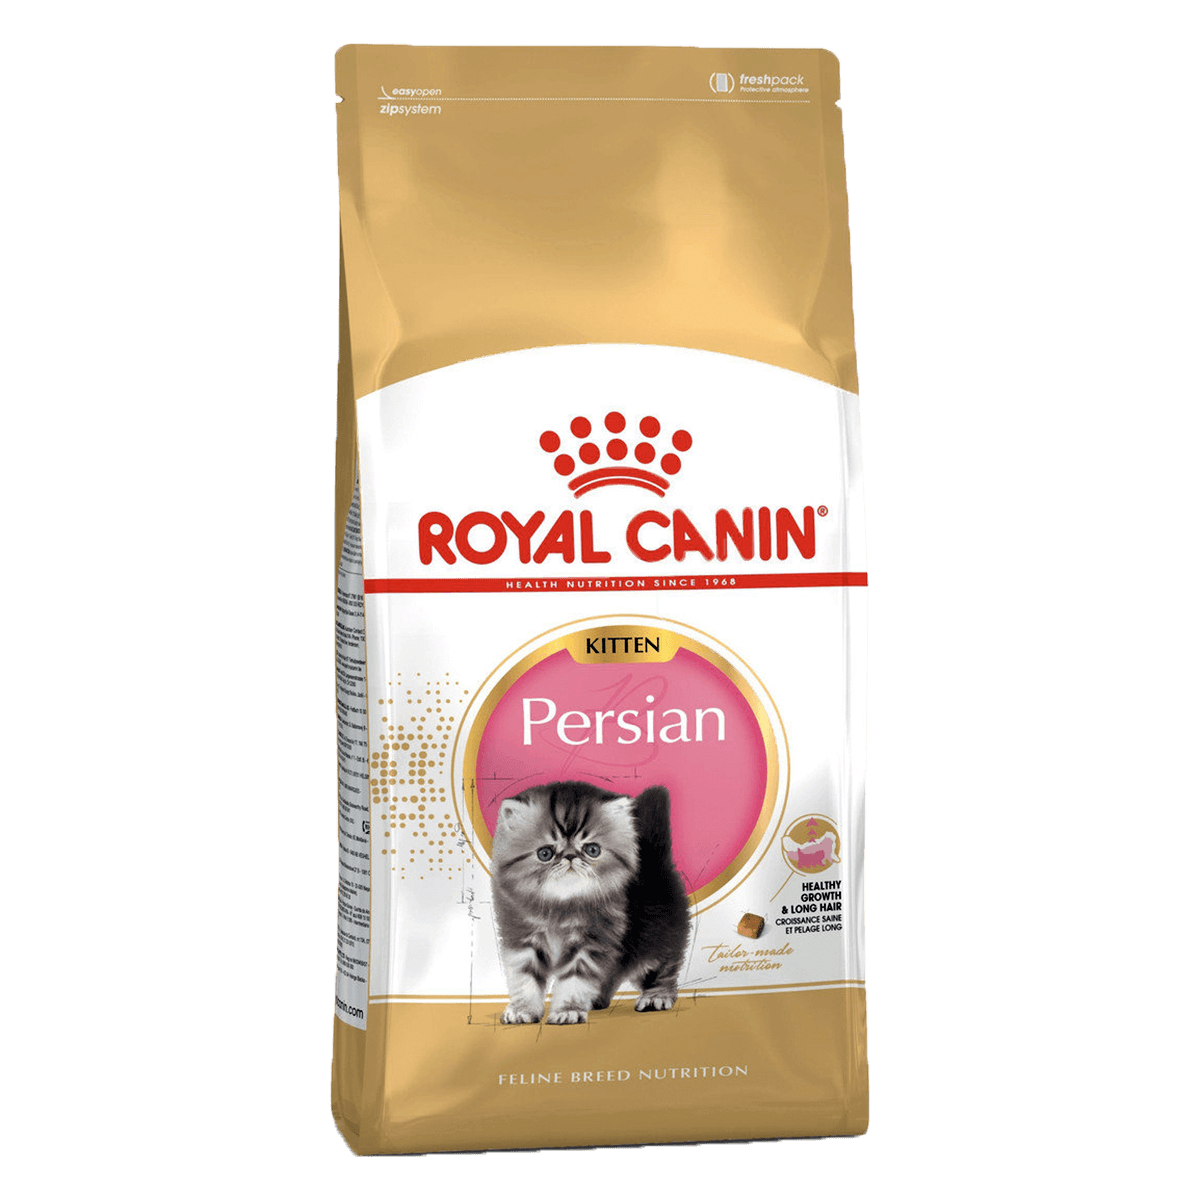 Royal Canin Persian Kitten, 400 г - корм Роял Канин для персидских котят